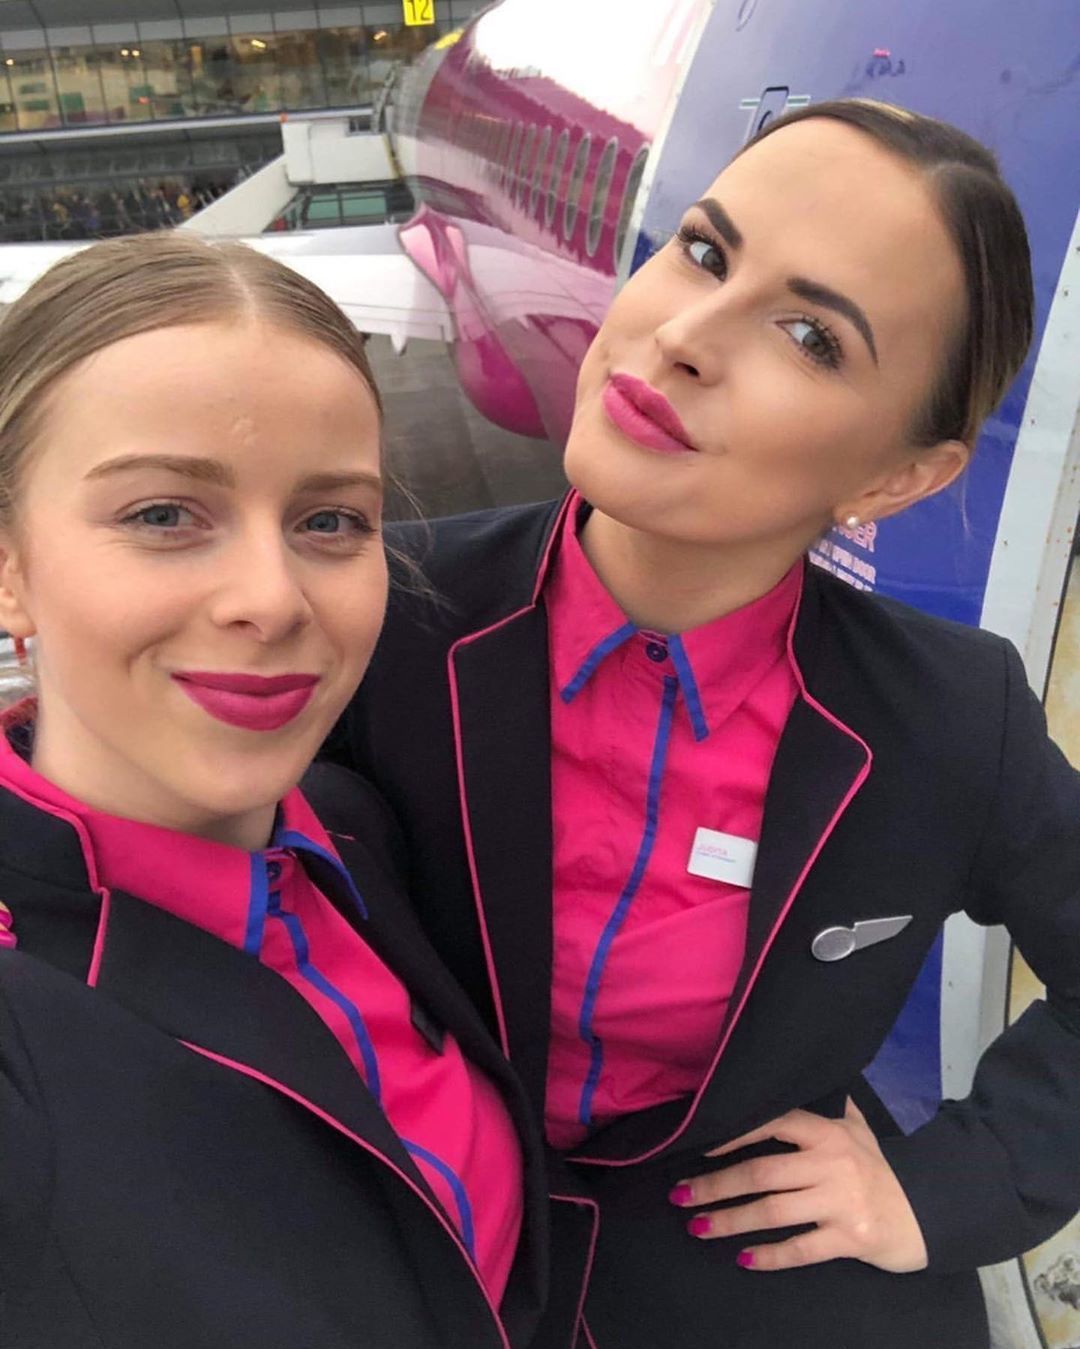 Two flight attendants near an airplane